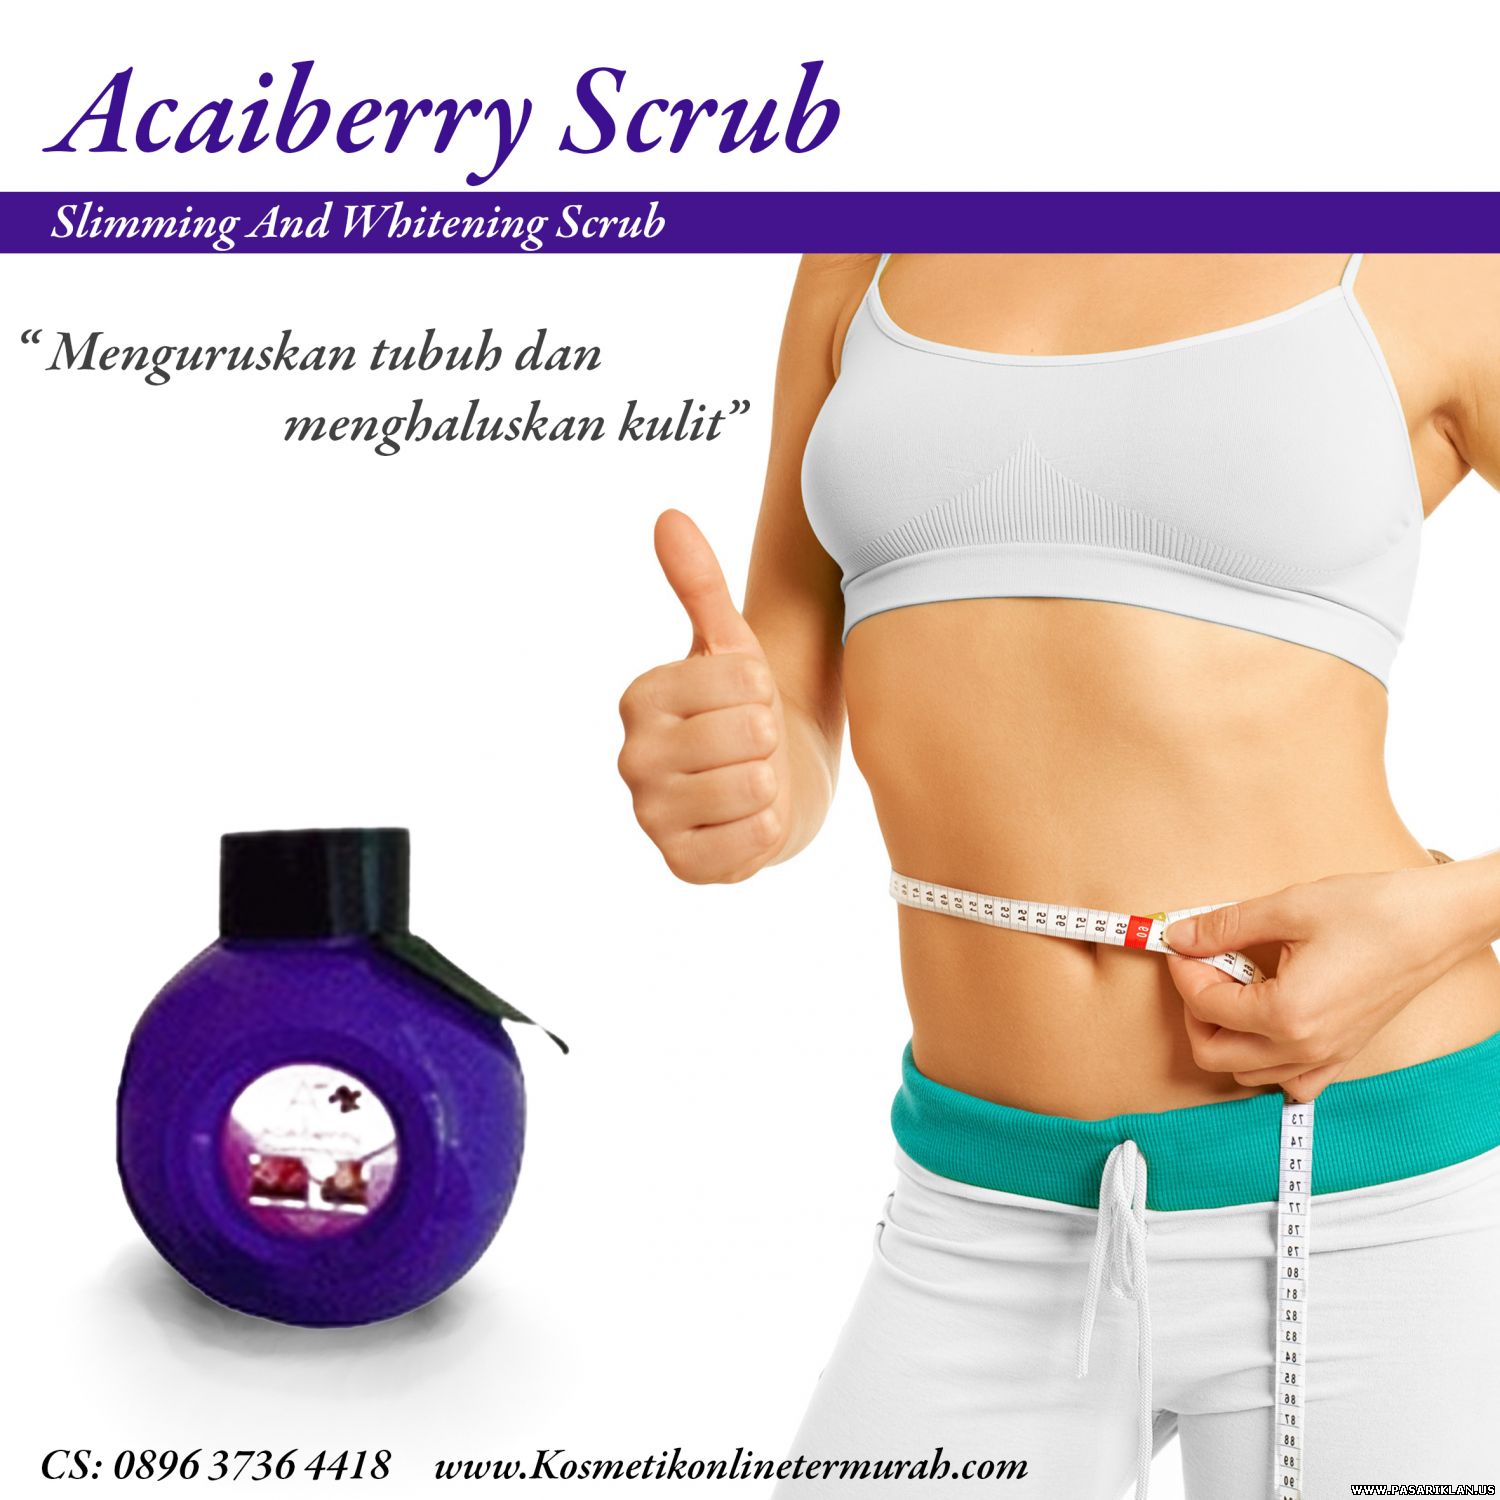 (http://www.kosmetikonlinetermurah.com/2014/09/acaiberry-scrub-obat-pelangsing-ampuh.html)